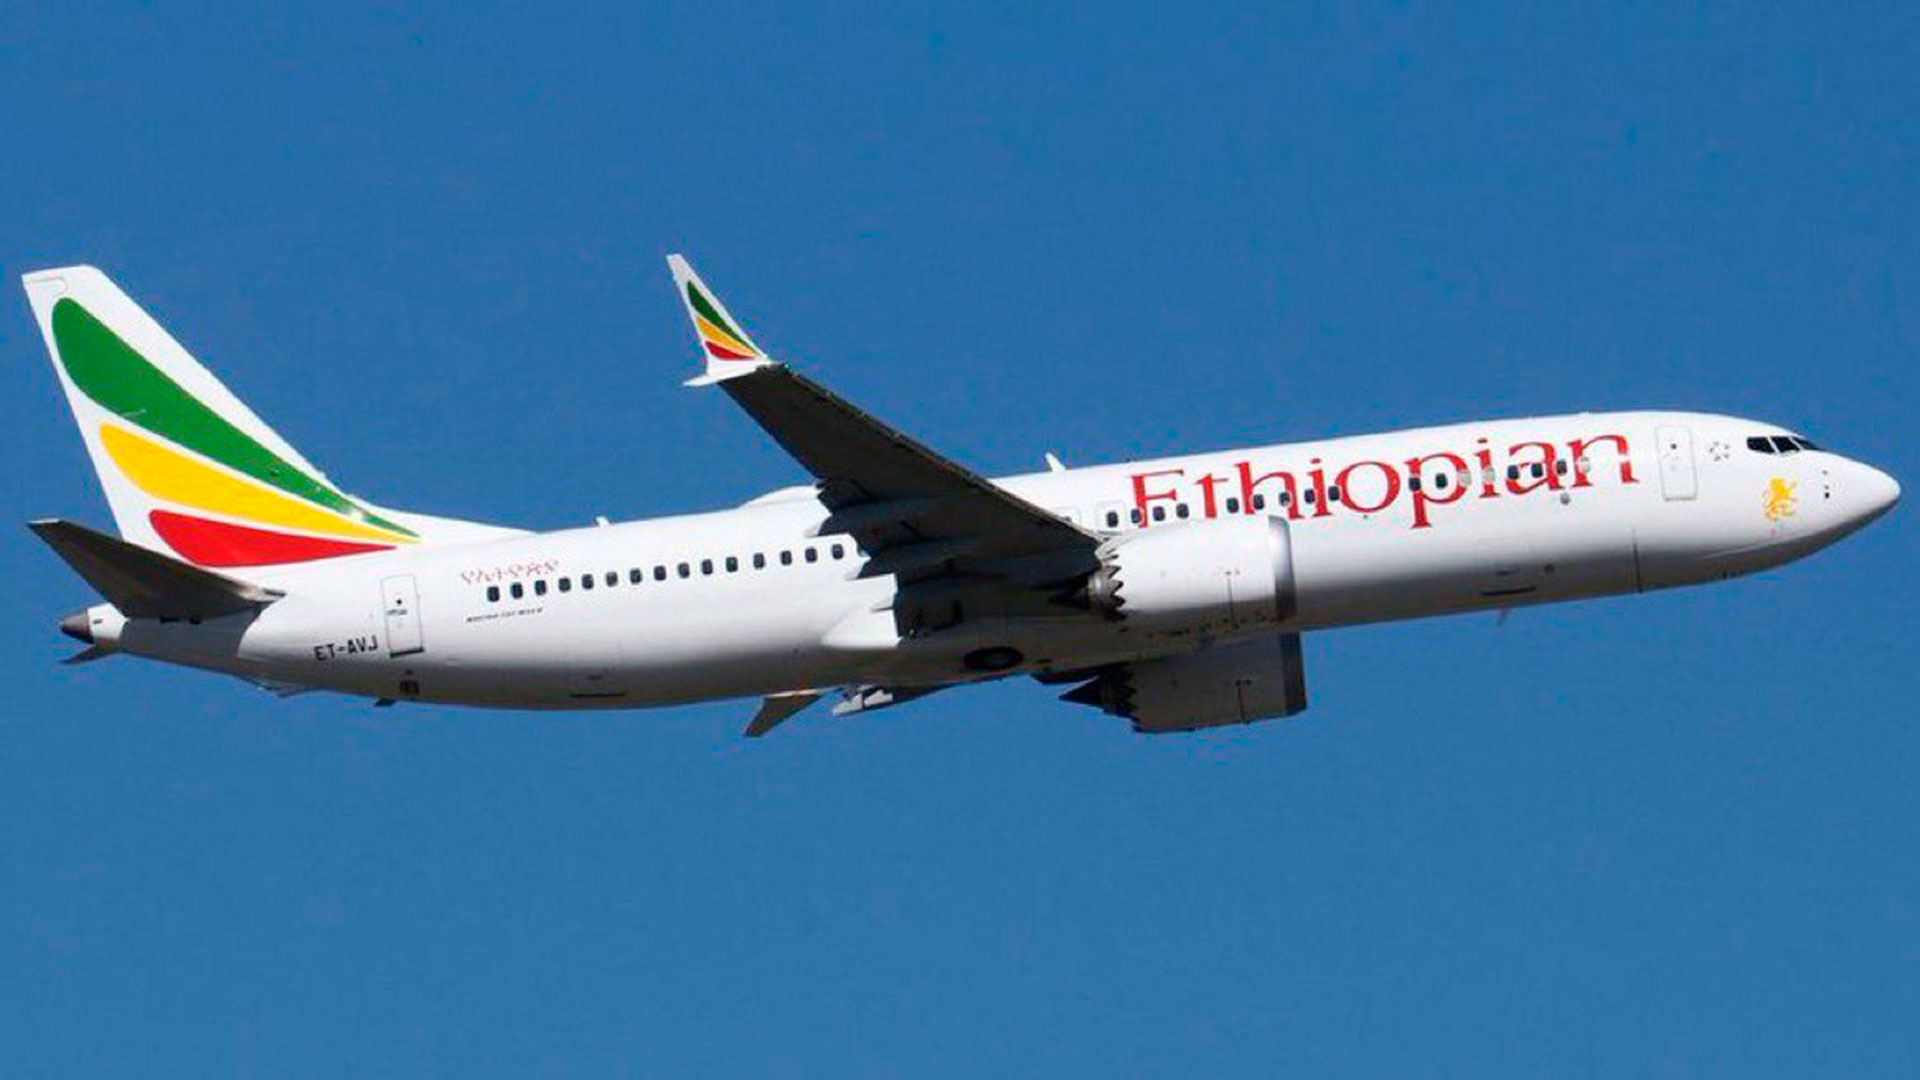 Two Ethiopian Airlines pilots fell asleep mid-flight